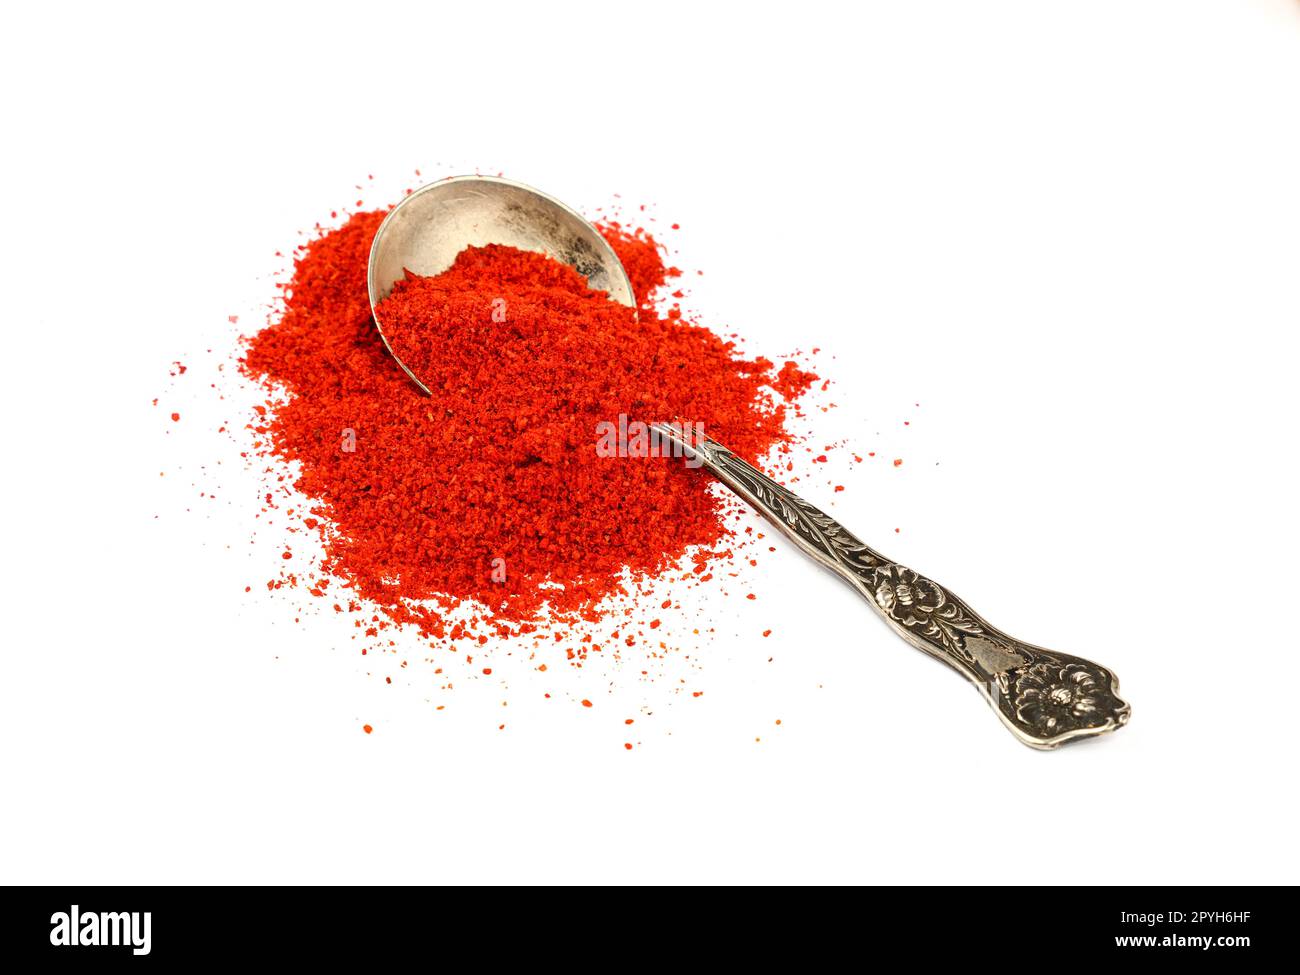 Metalllöffel voll mit roter, heißer Chili-Pfeffer Stockfoto